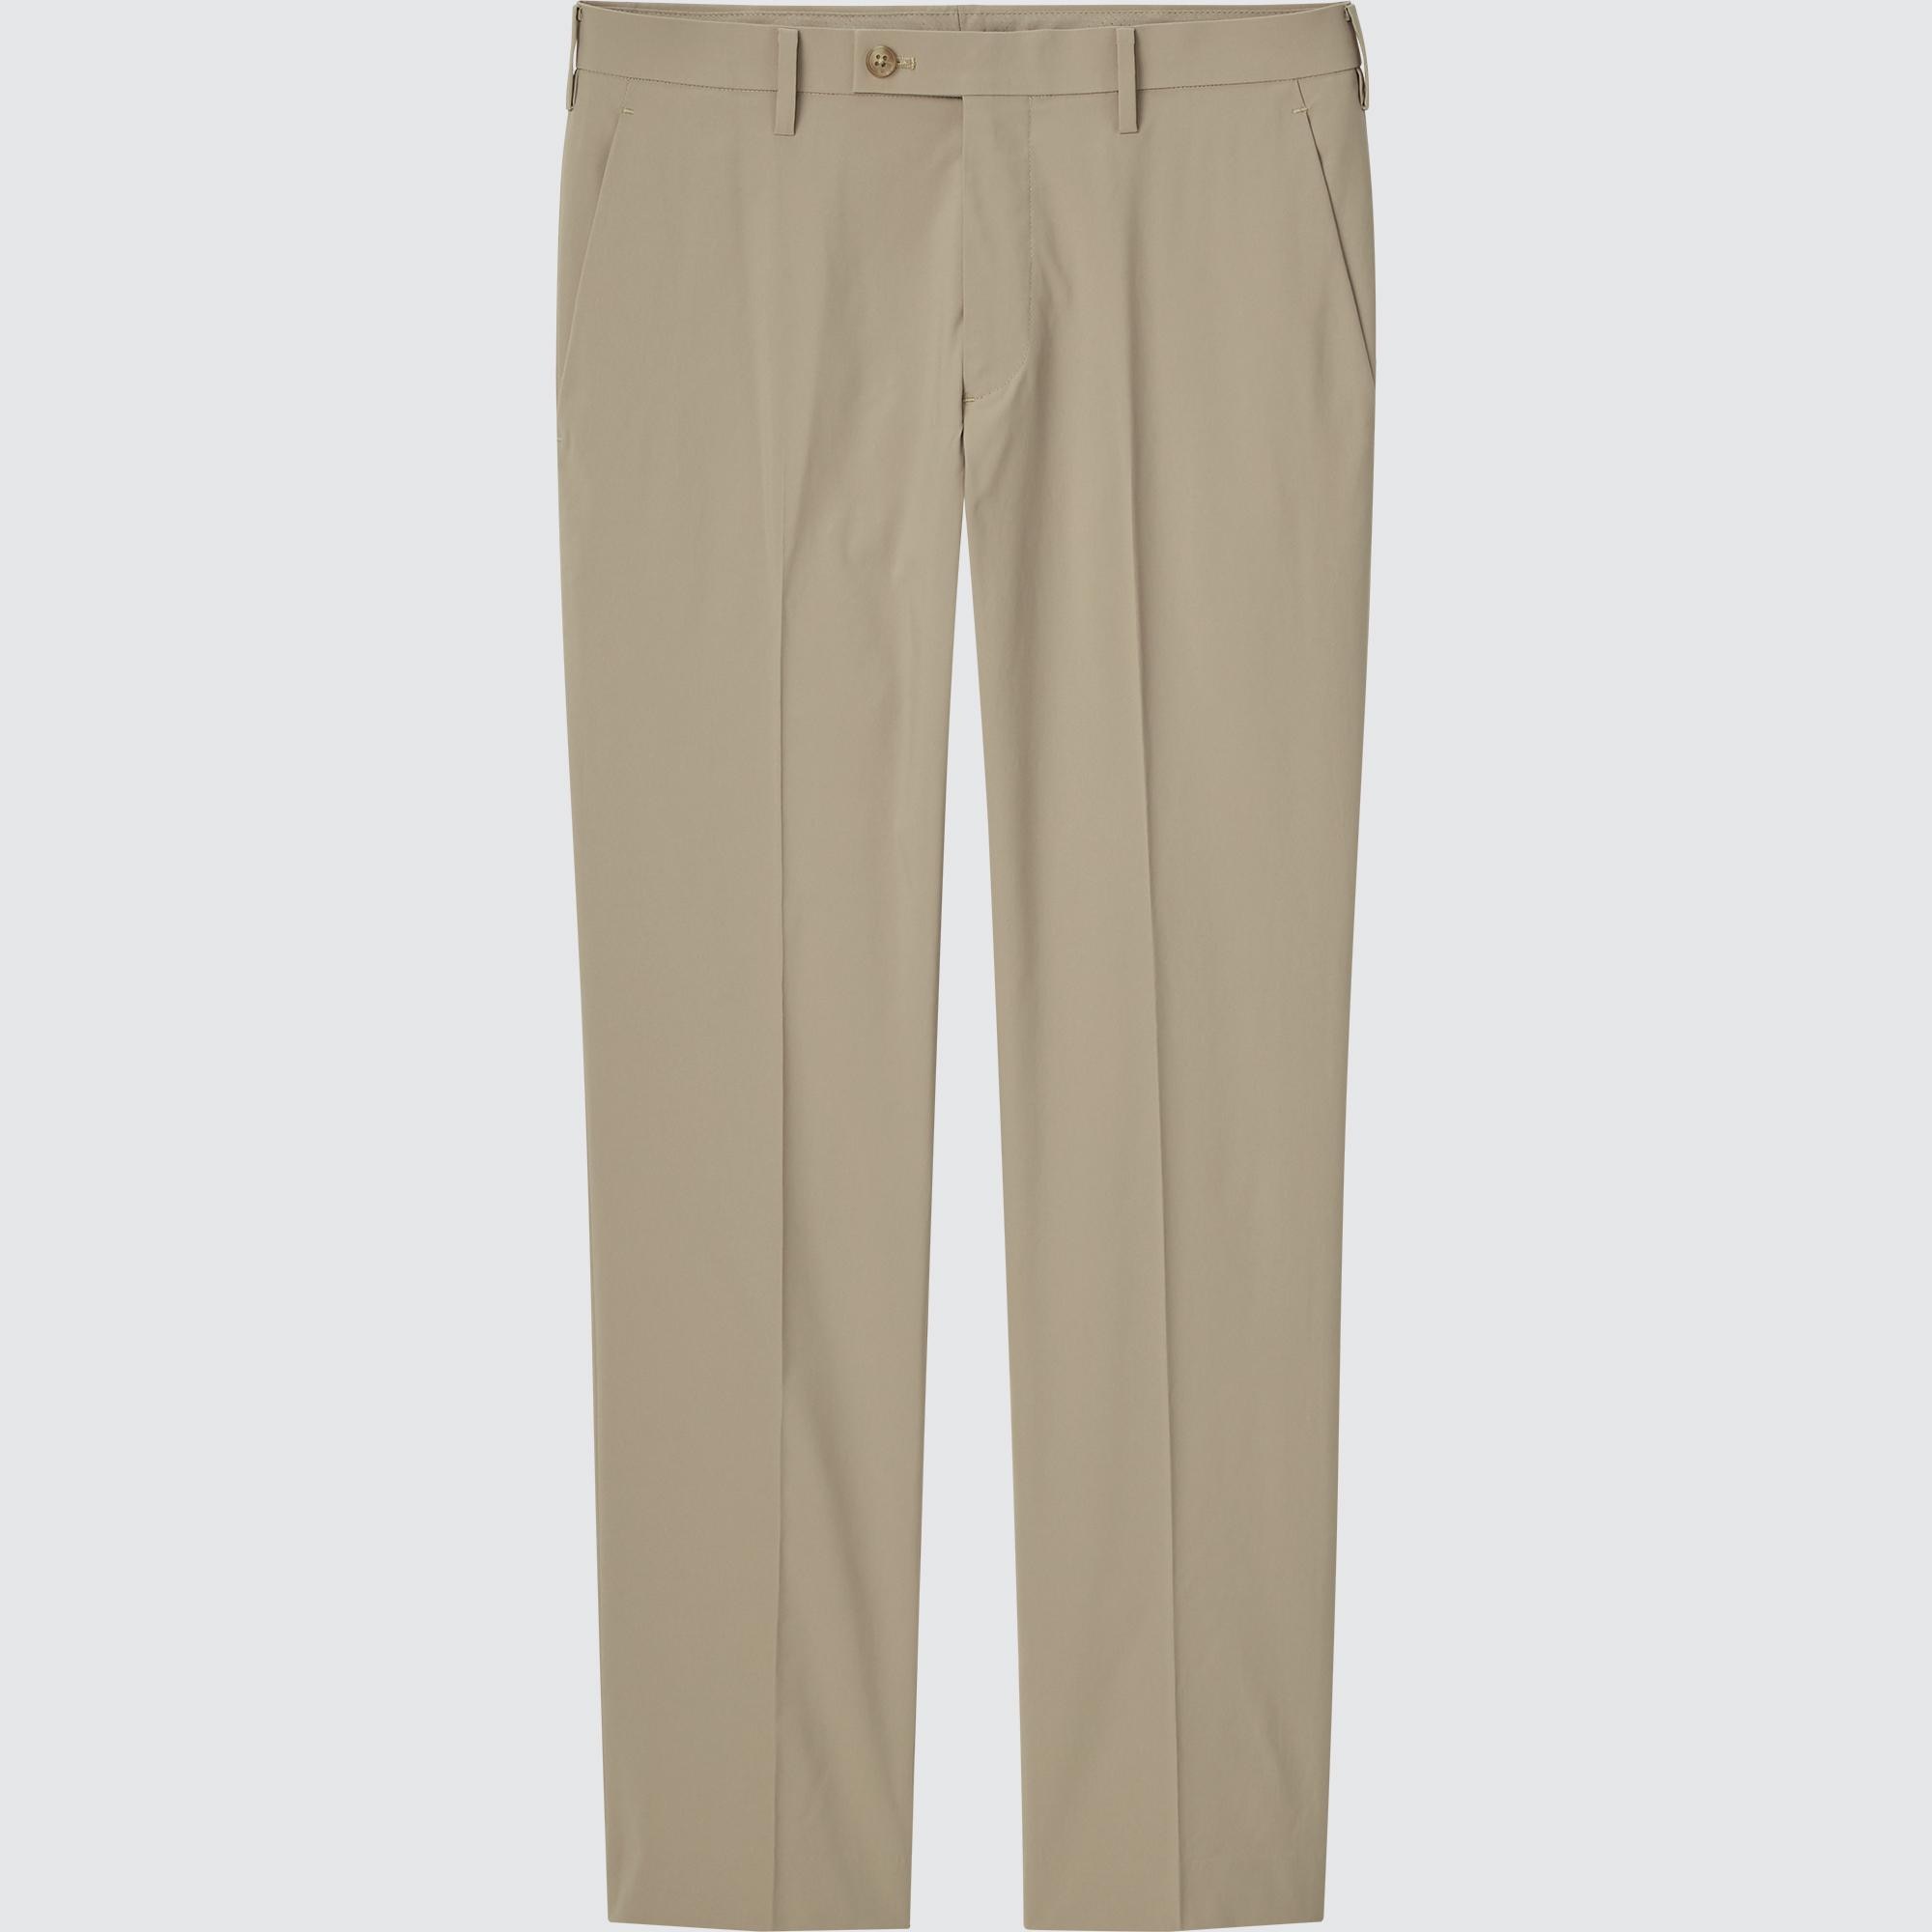 Reviews for AirSense Pants (Ultra Light Pants) (Cotton Like)